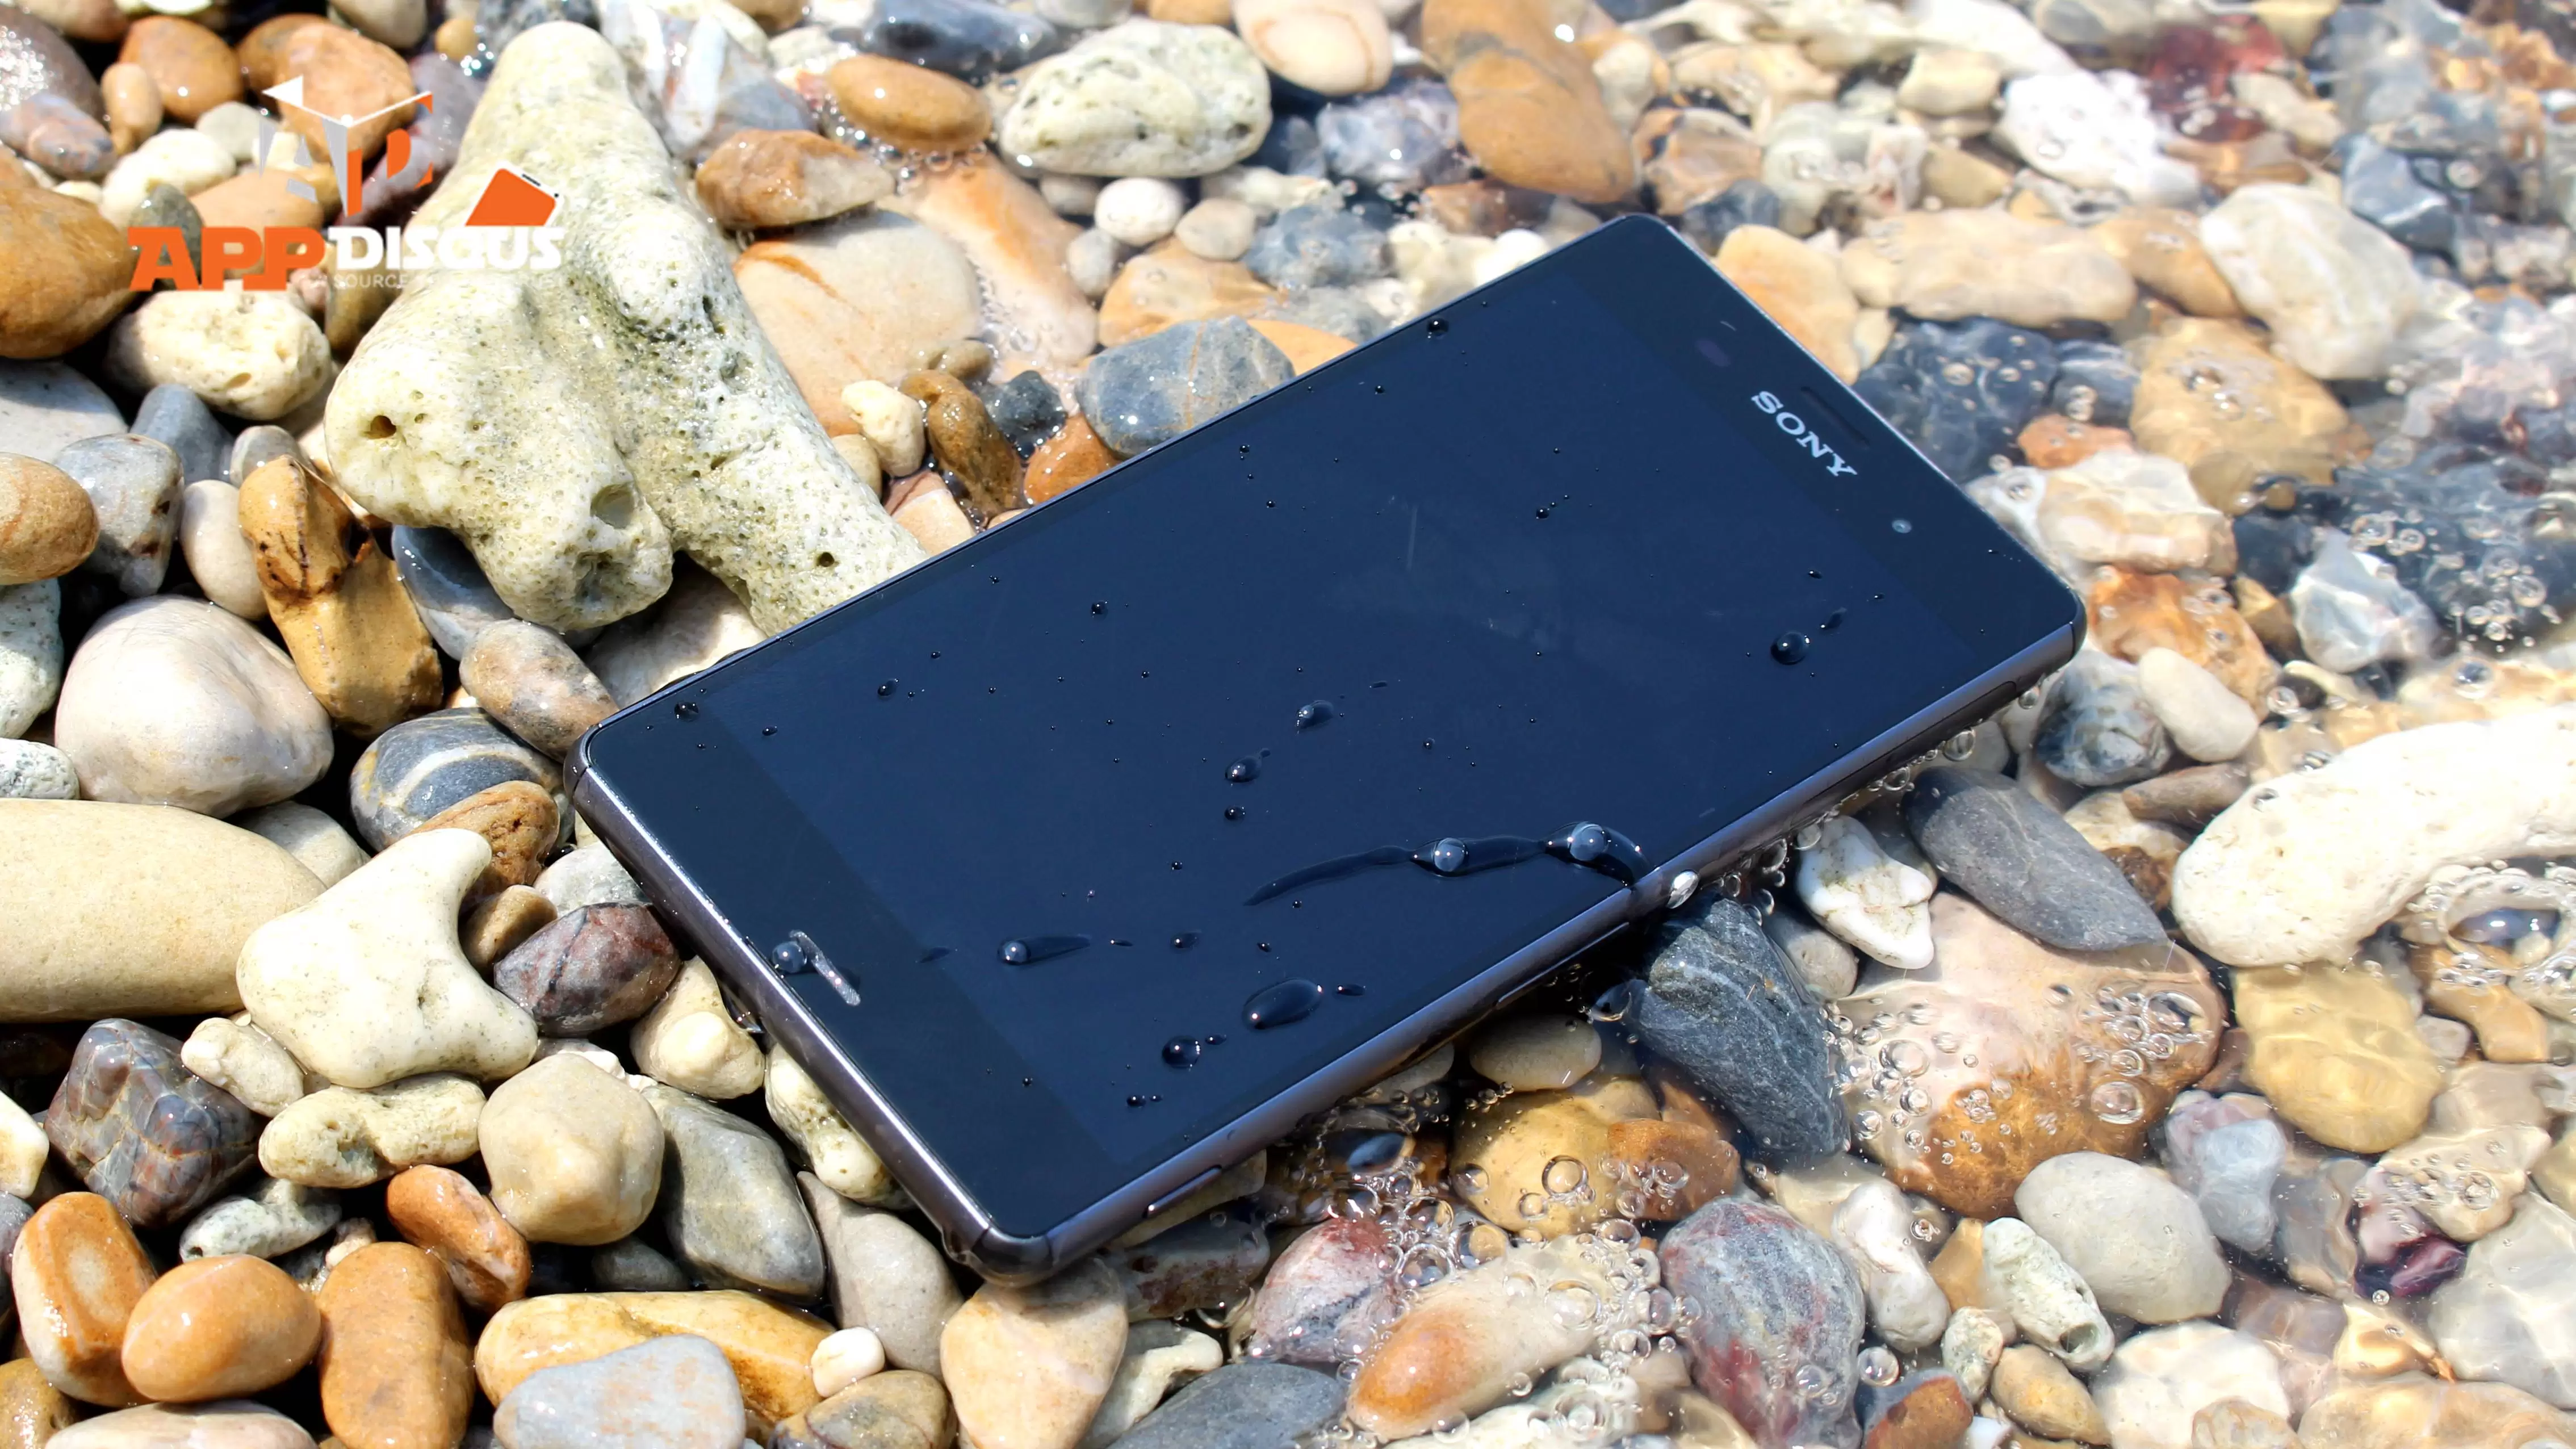 reviews SONY Xperia Z3 1 | Sony Xperia Z4 | [ข่าว] Sony ยังคงปล่อยคลิปโปรโมท Xperia Z3 กับสิ่งที่เรือธงมากมายทำไม่ได้